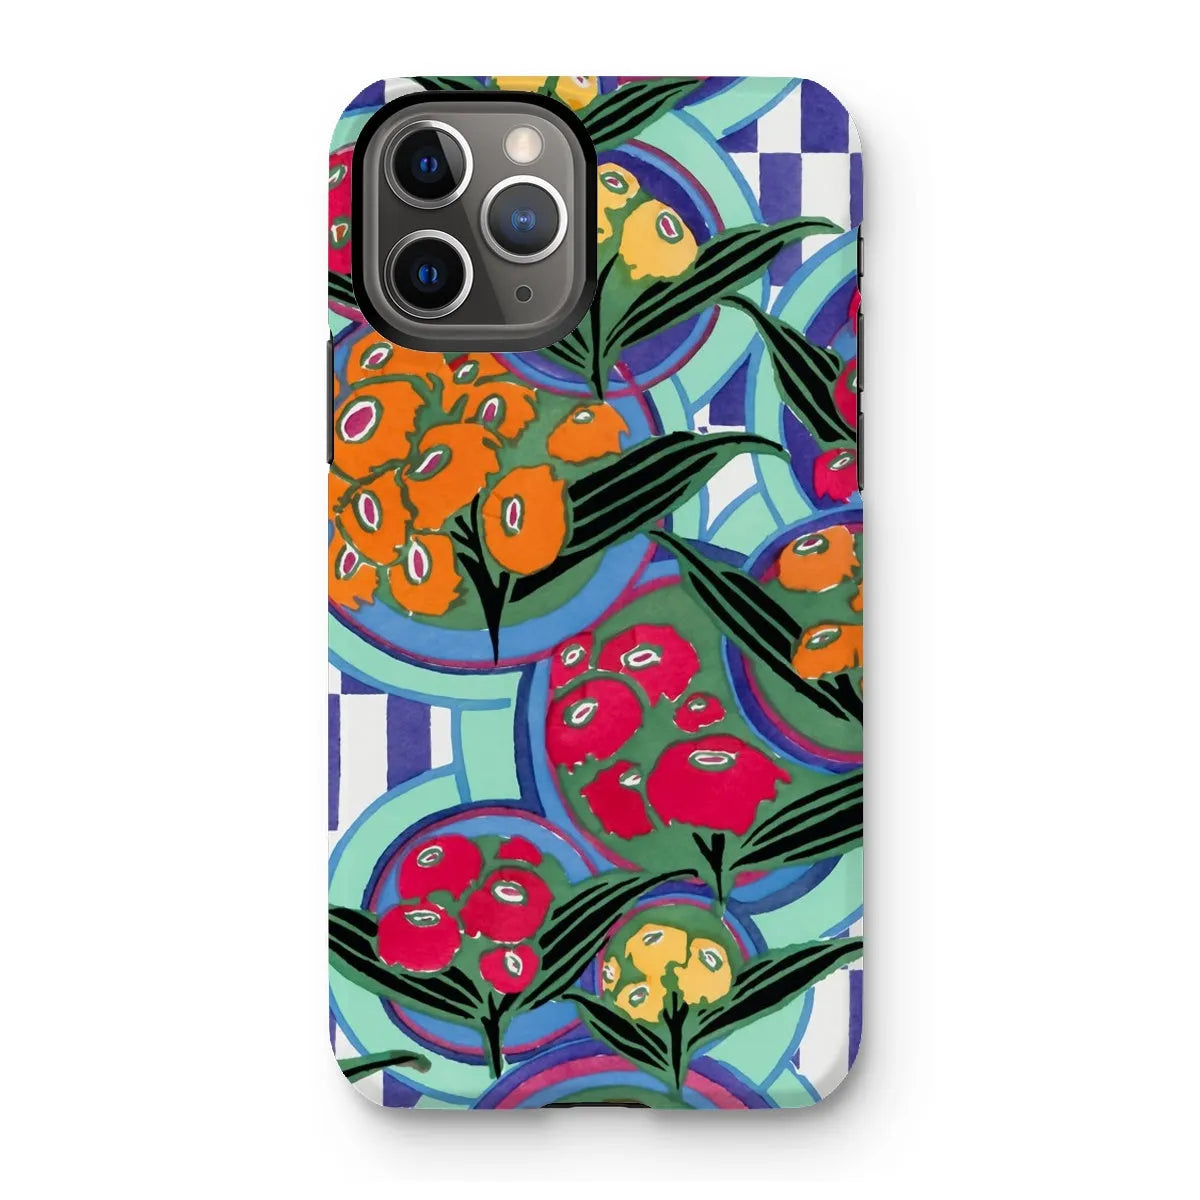 Vibrant Floral Aesthetic Art Phone Case - E.a. Séguy - Iphone 11 Pro / Matte - Mobile Phone Cases - Aesthetic Art